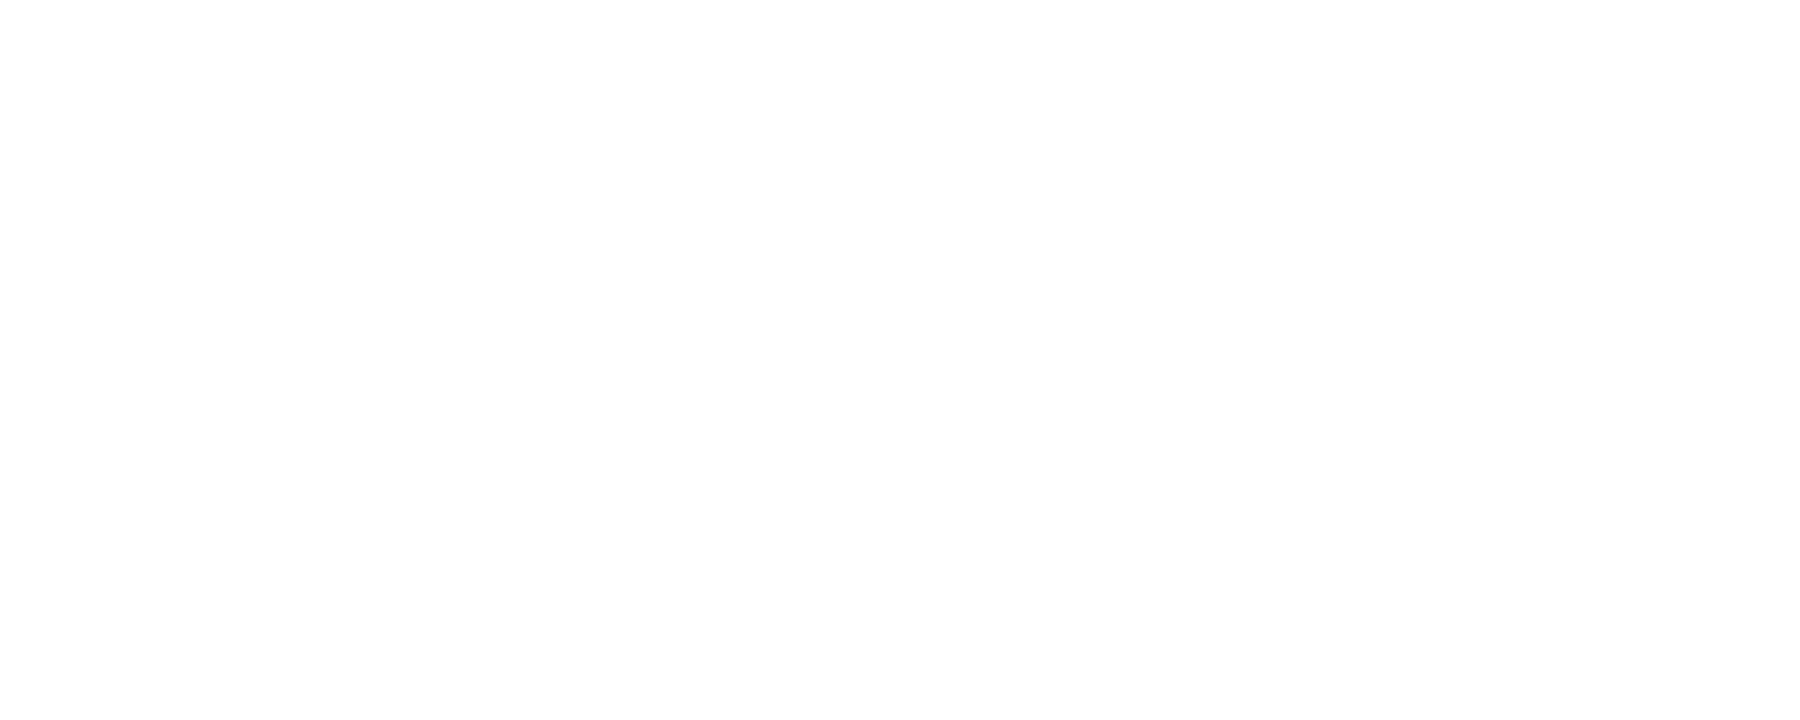 Yoga of hope 2020